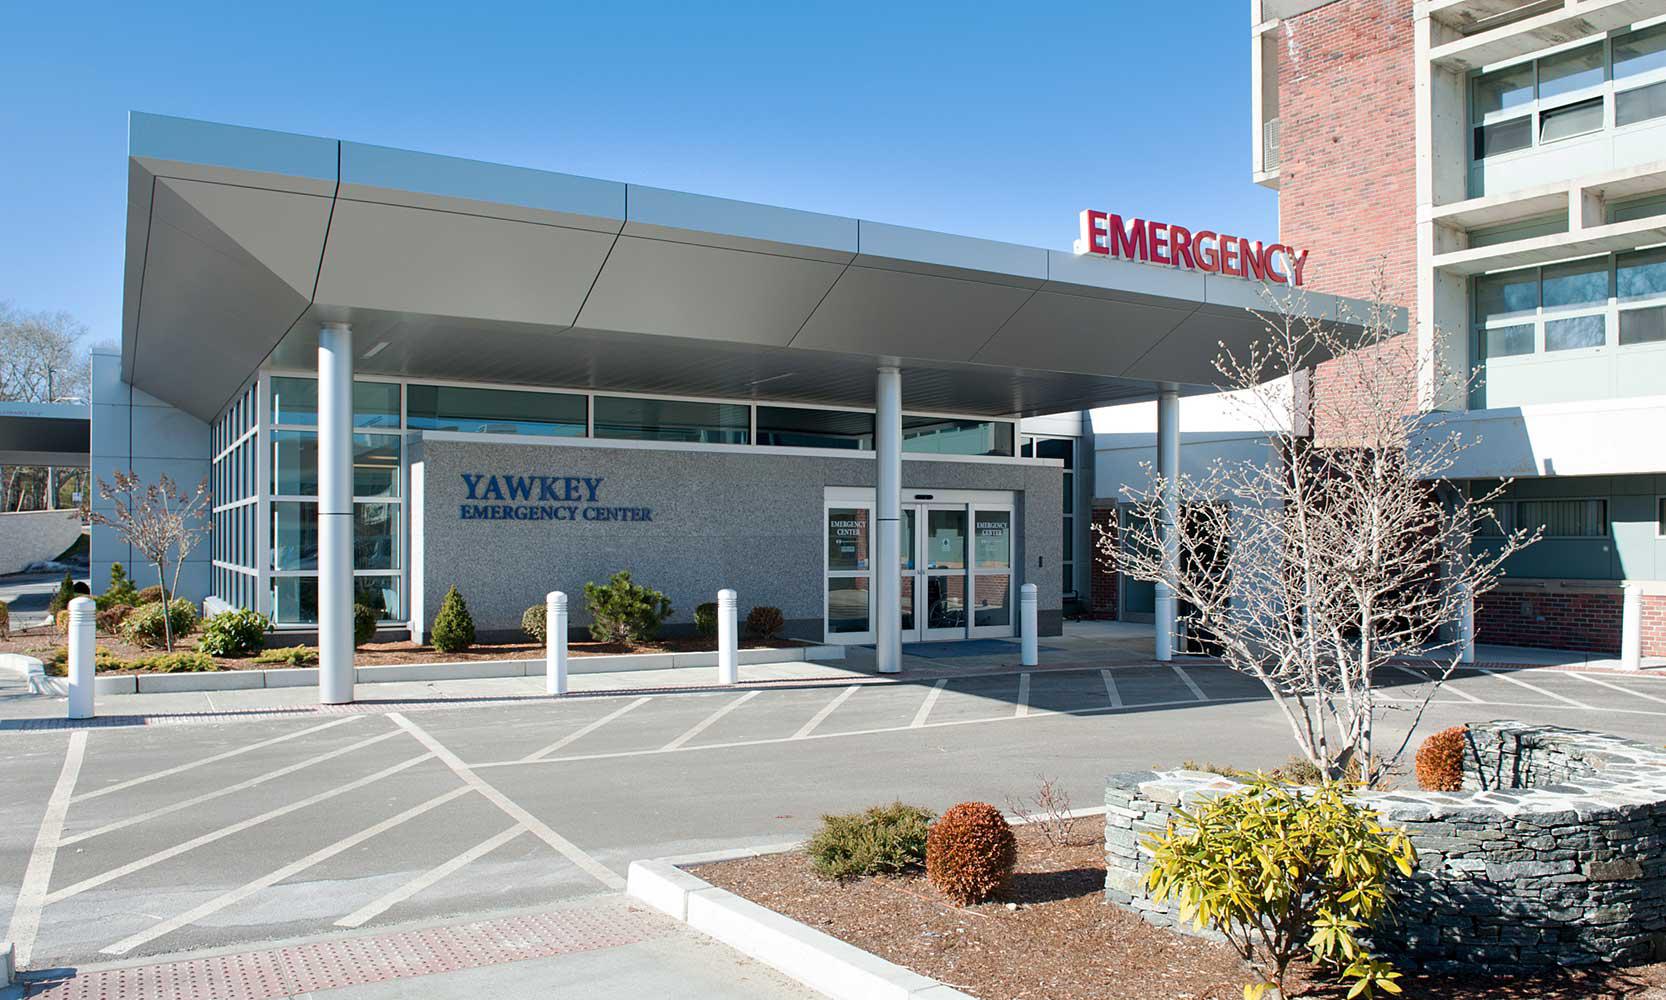 Yawkey Emergency Center at Falmouth Hospital, Falmouth, MA